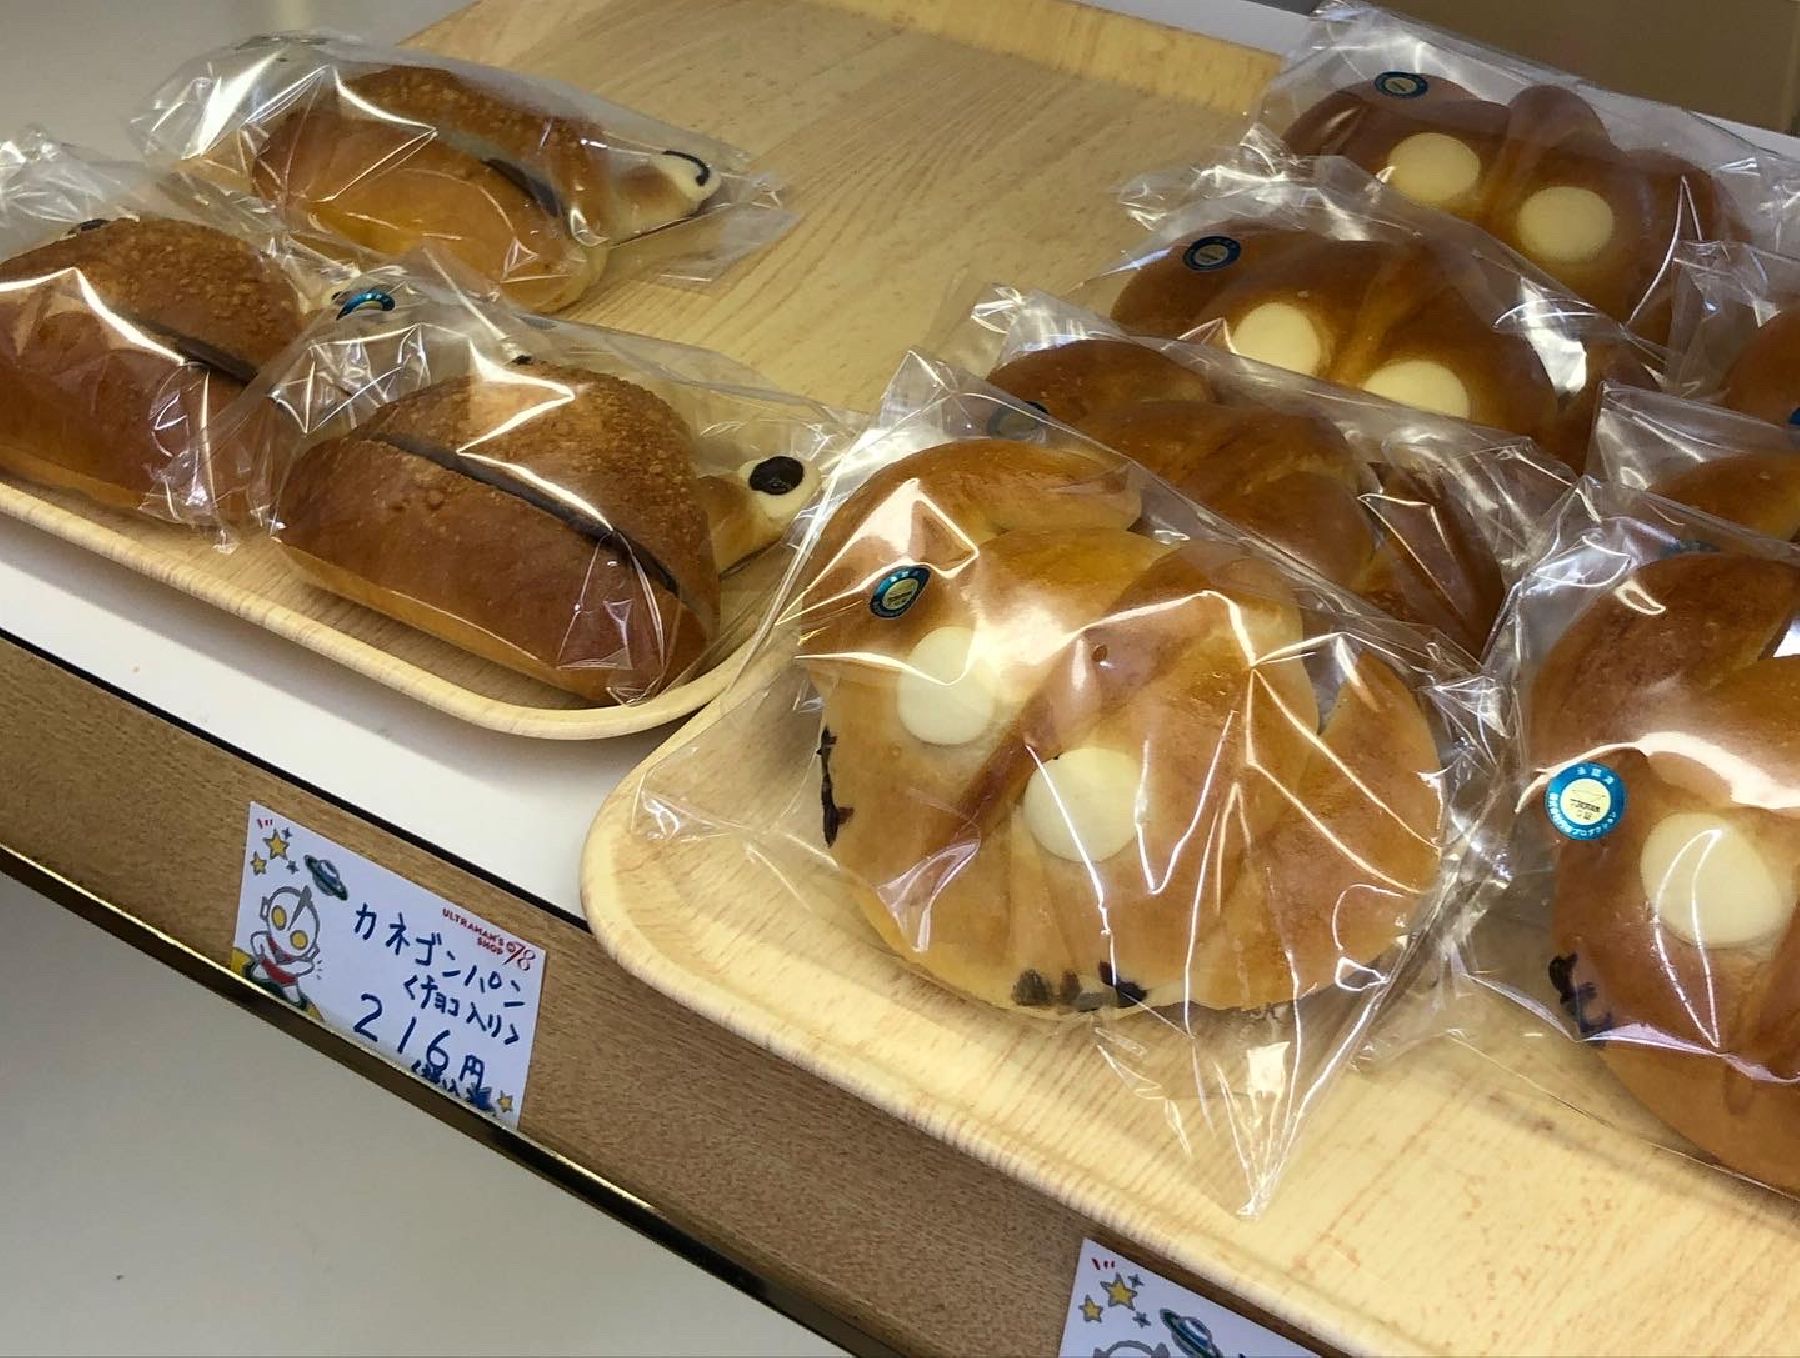 Tamakiya Bakery